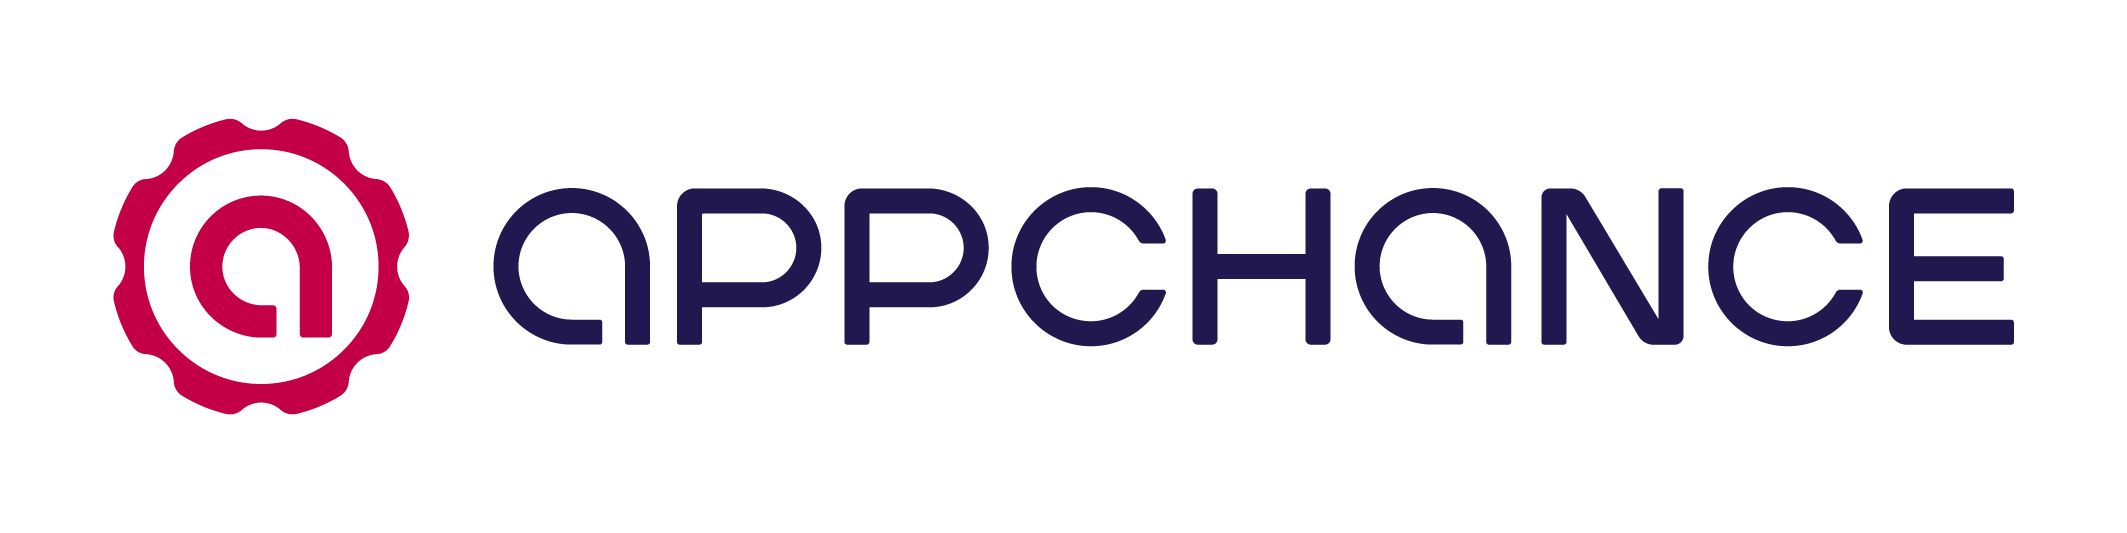 logo sponsora Appchance